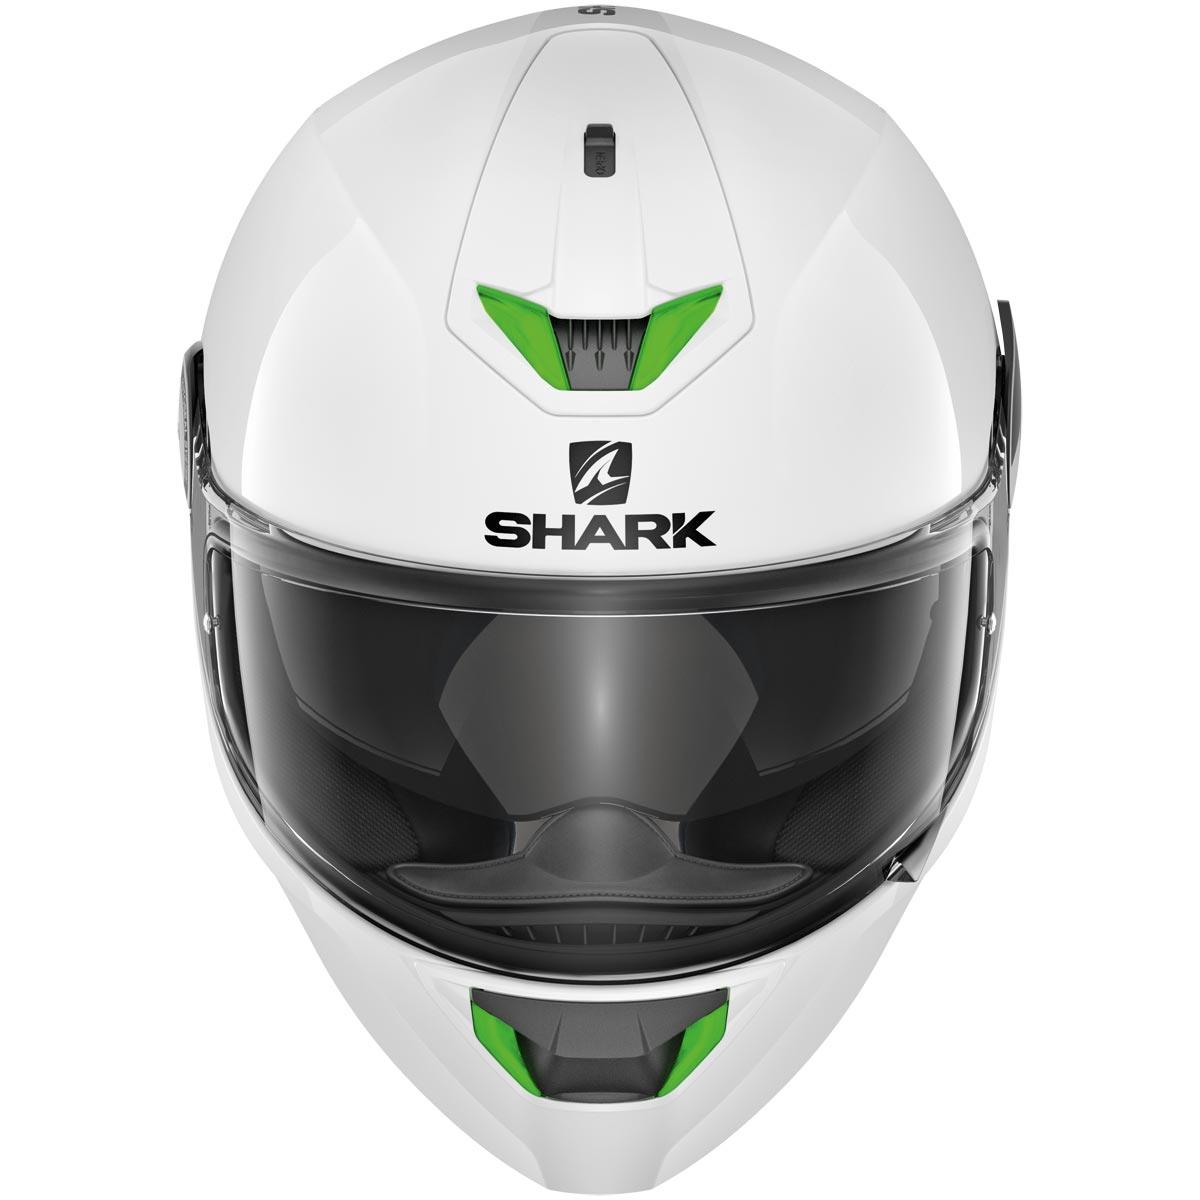 Shark Skwal 2 Blank Helmet WHU - White - getgearedshop